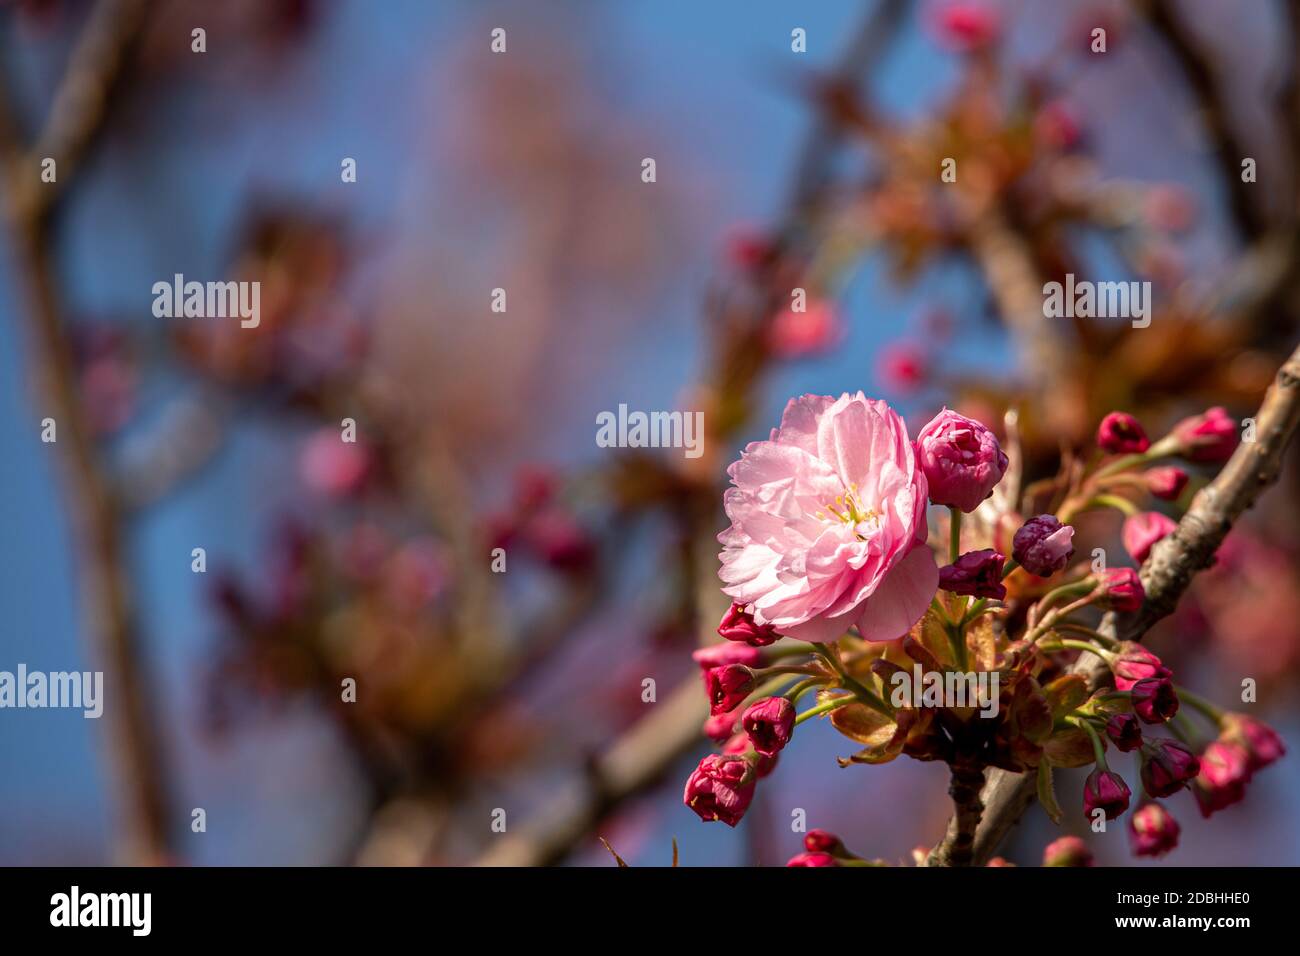 First ornamental cherry blossom Stock Photo